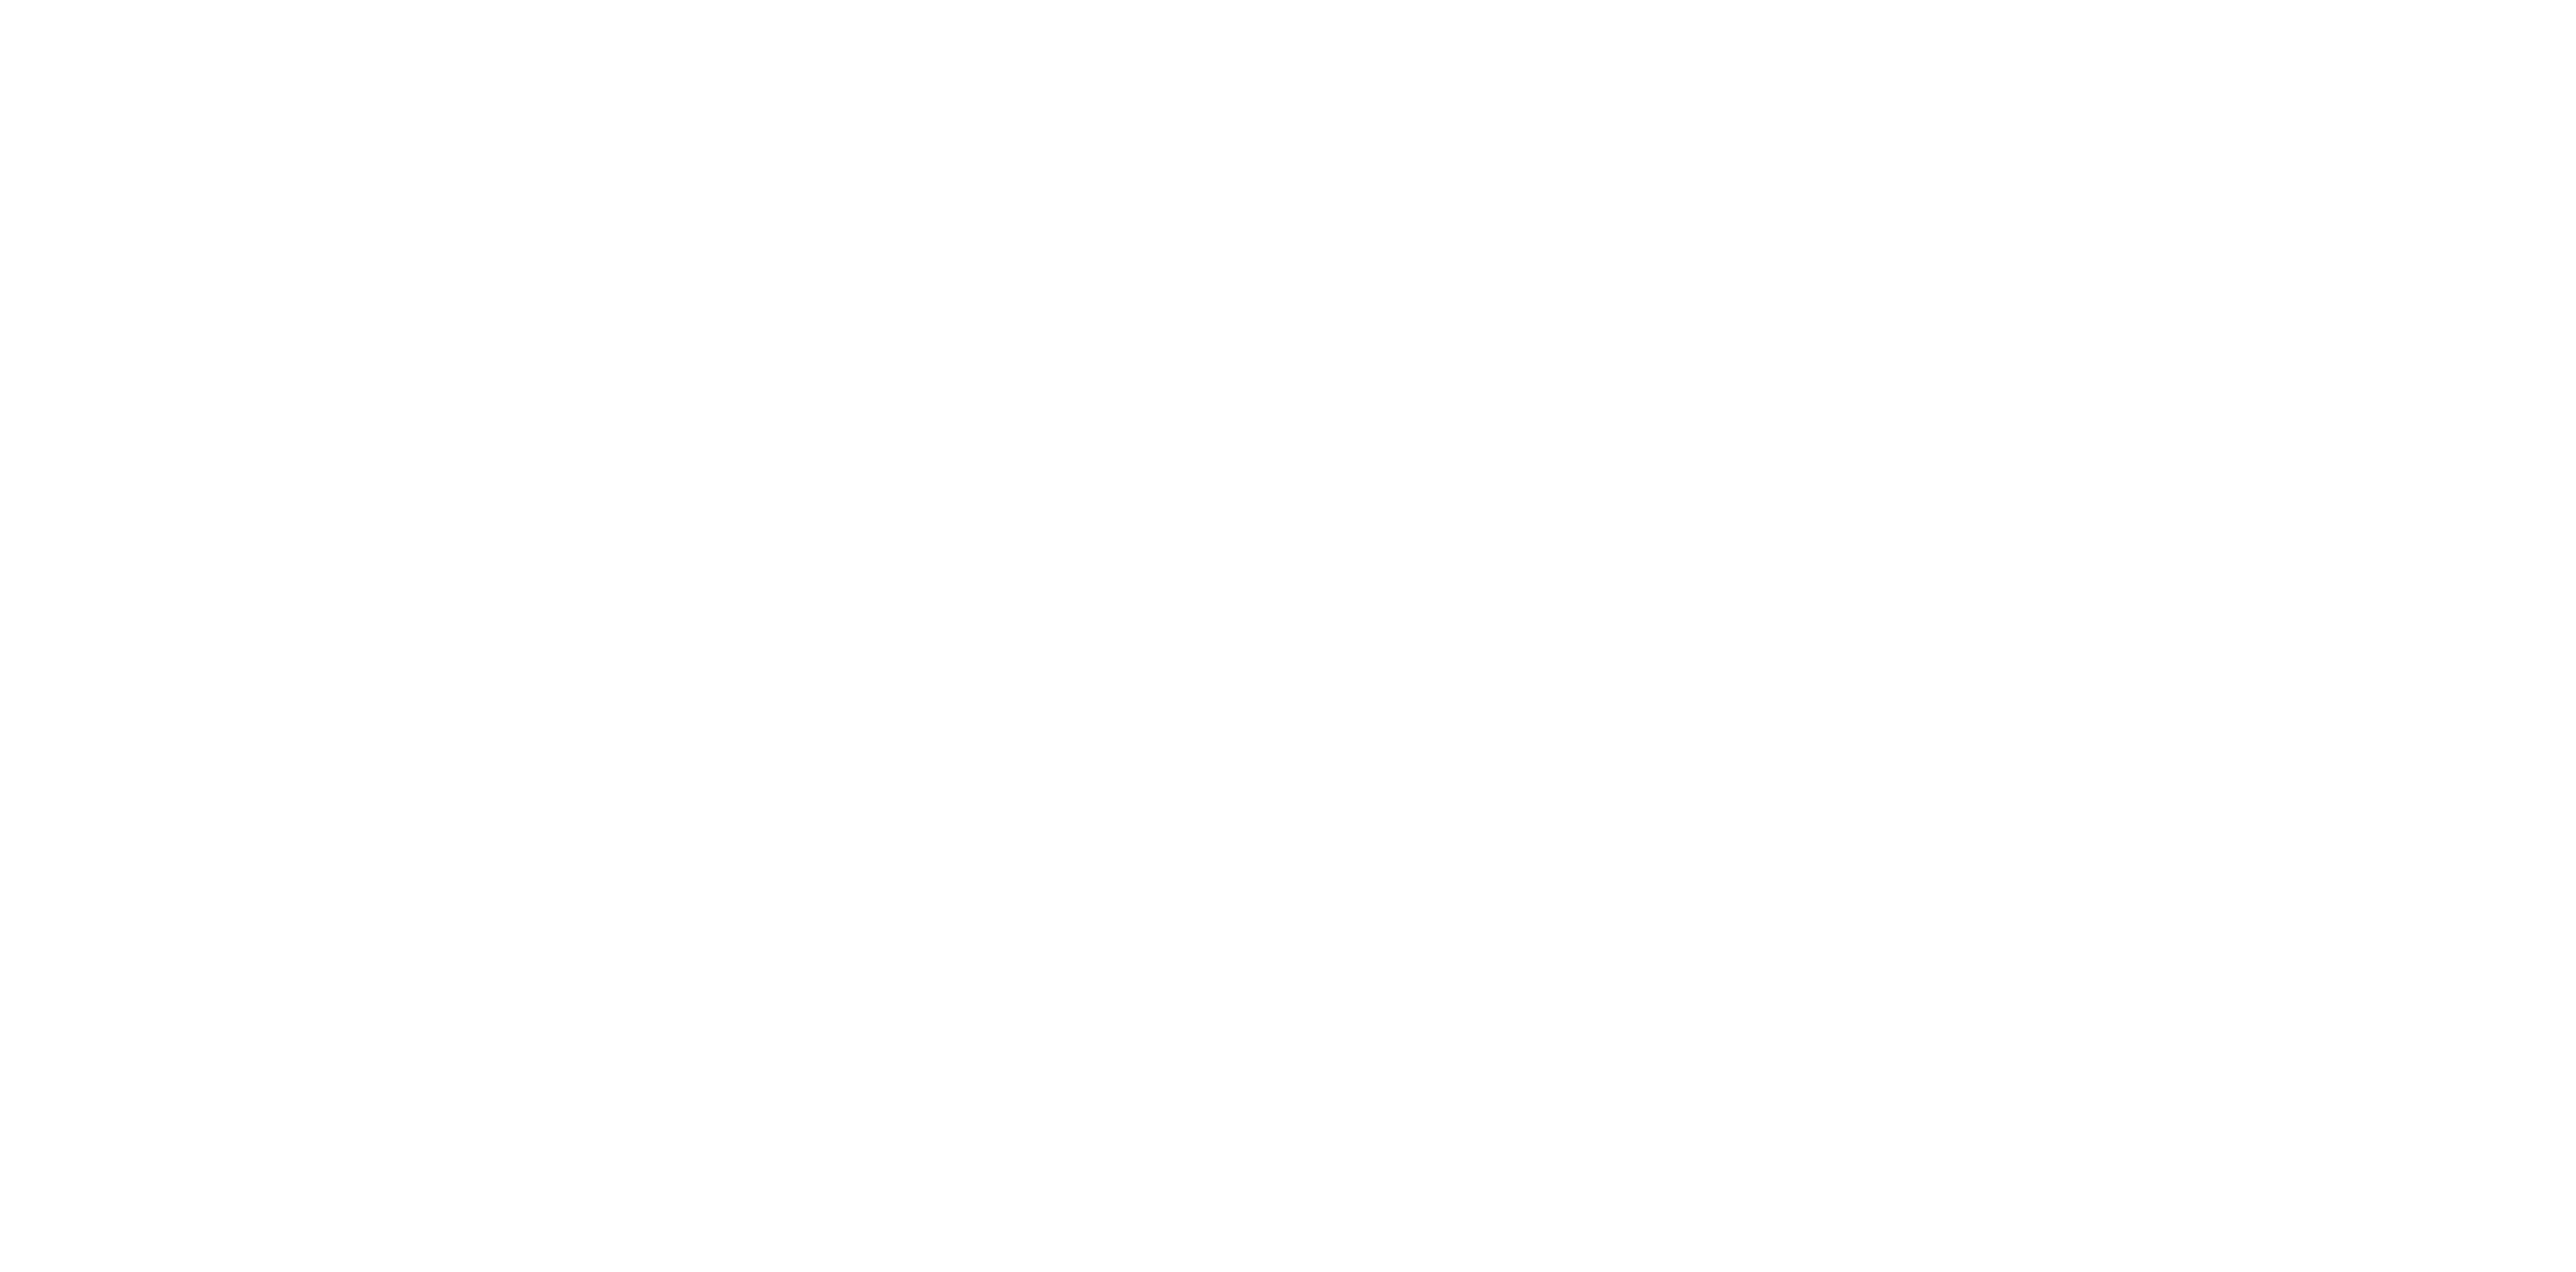 Insurtech Community Hub